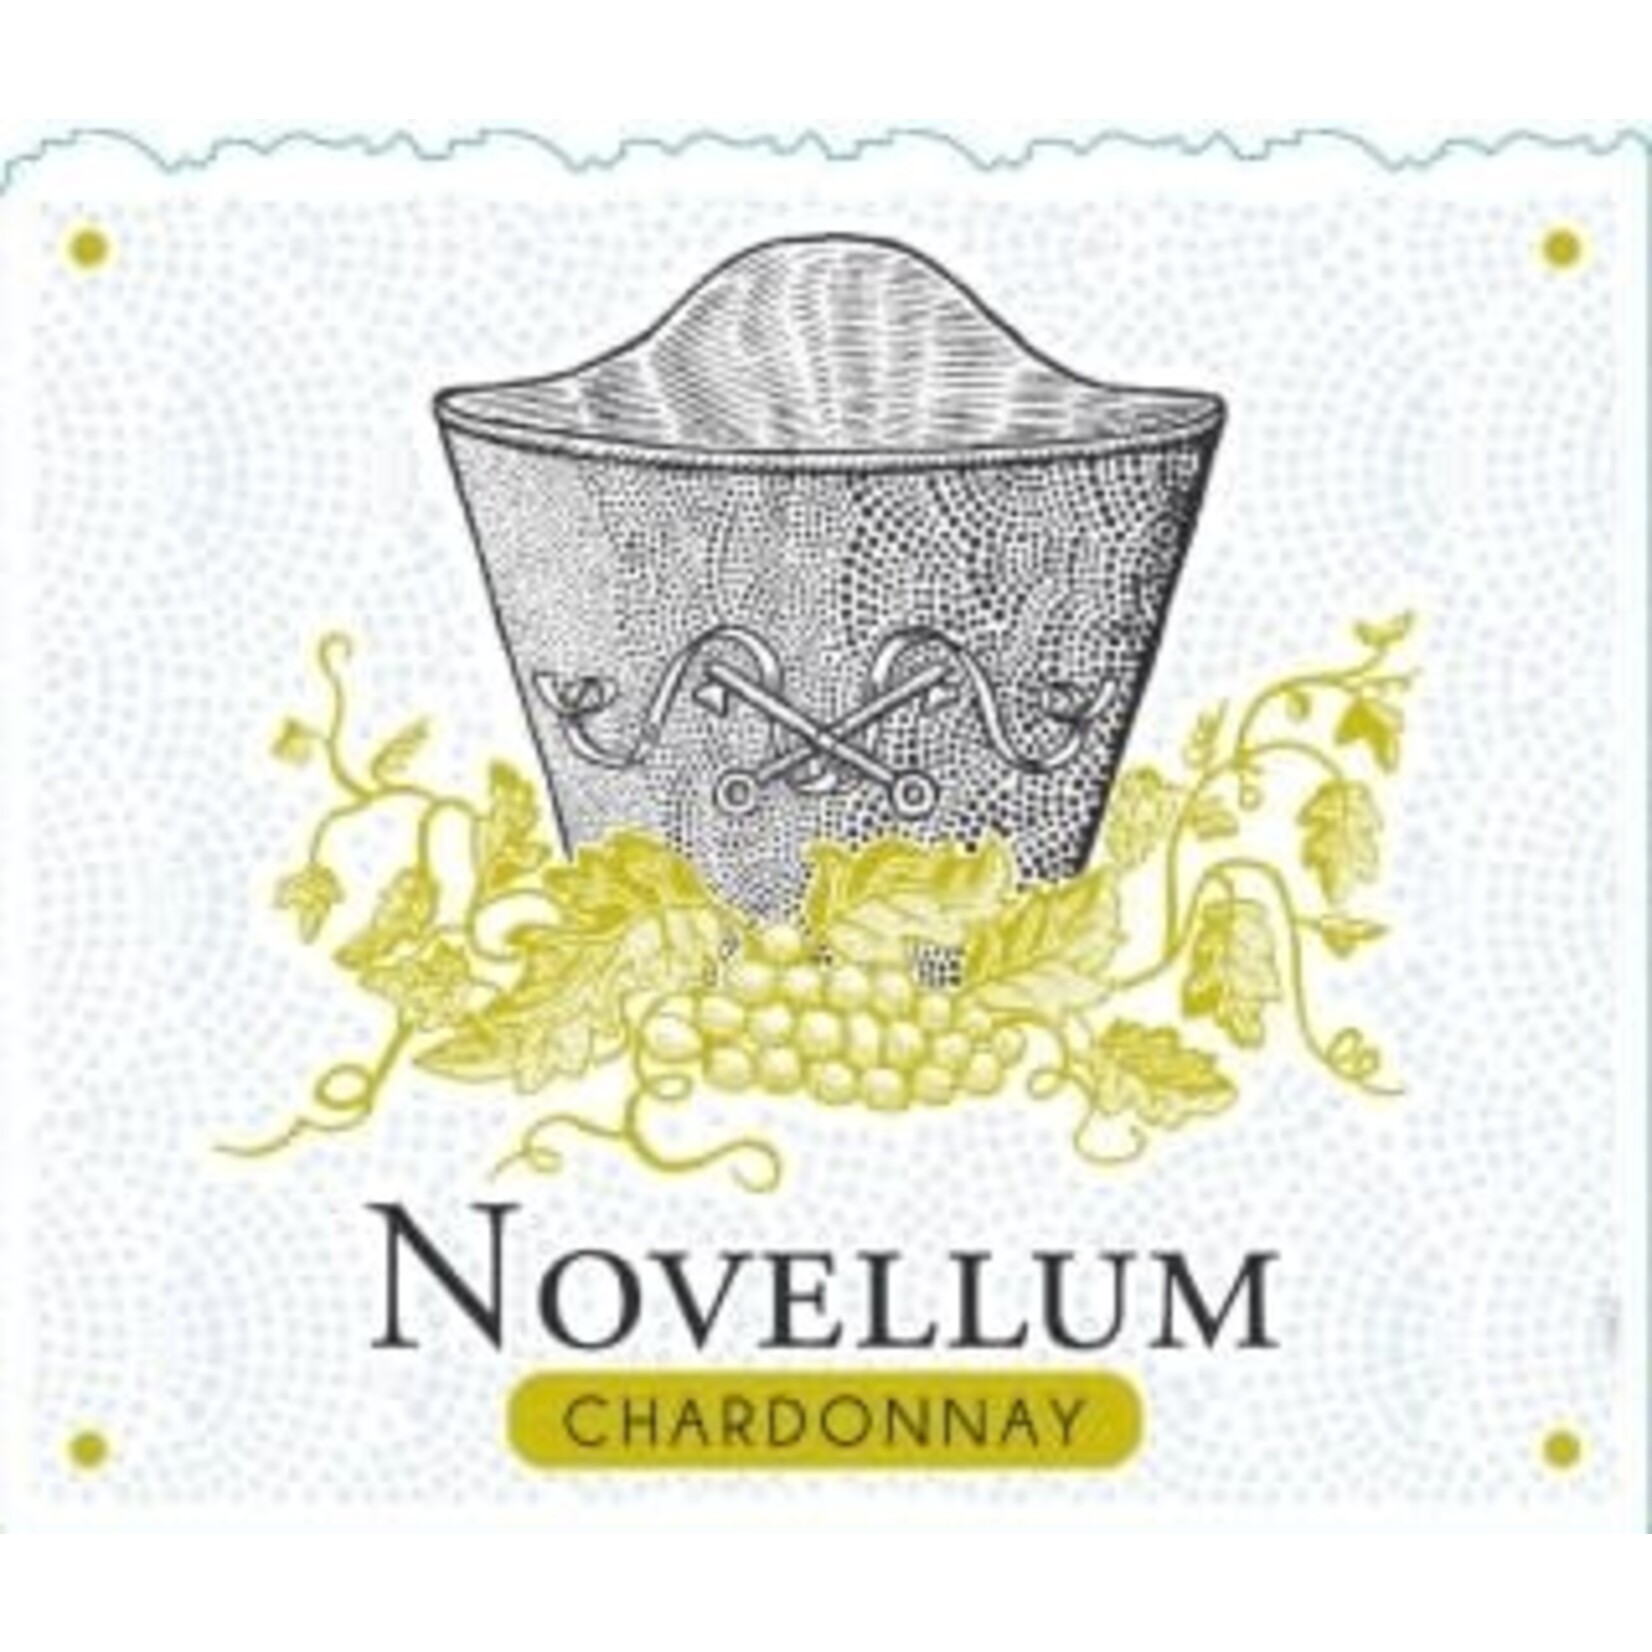 Novellum Chardonnay France